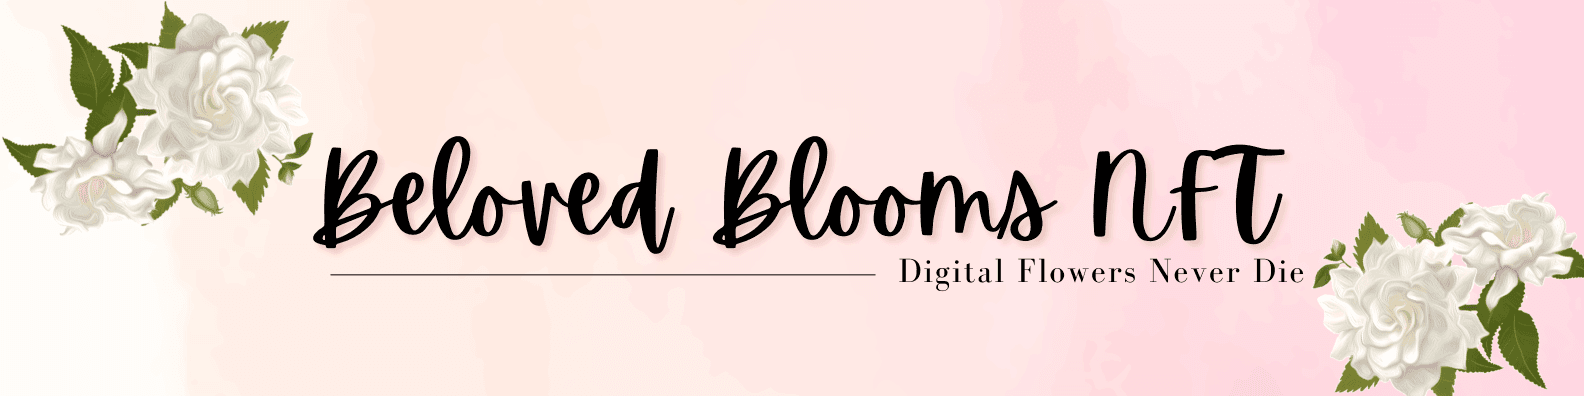 Beloved-Blooms-NFT 横幅